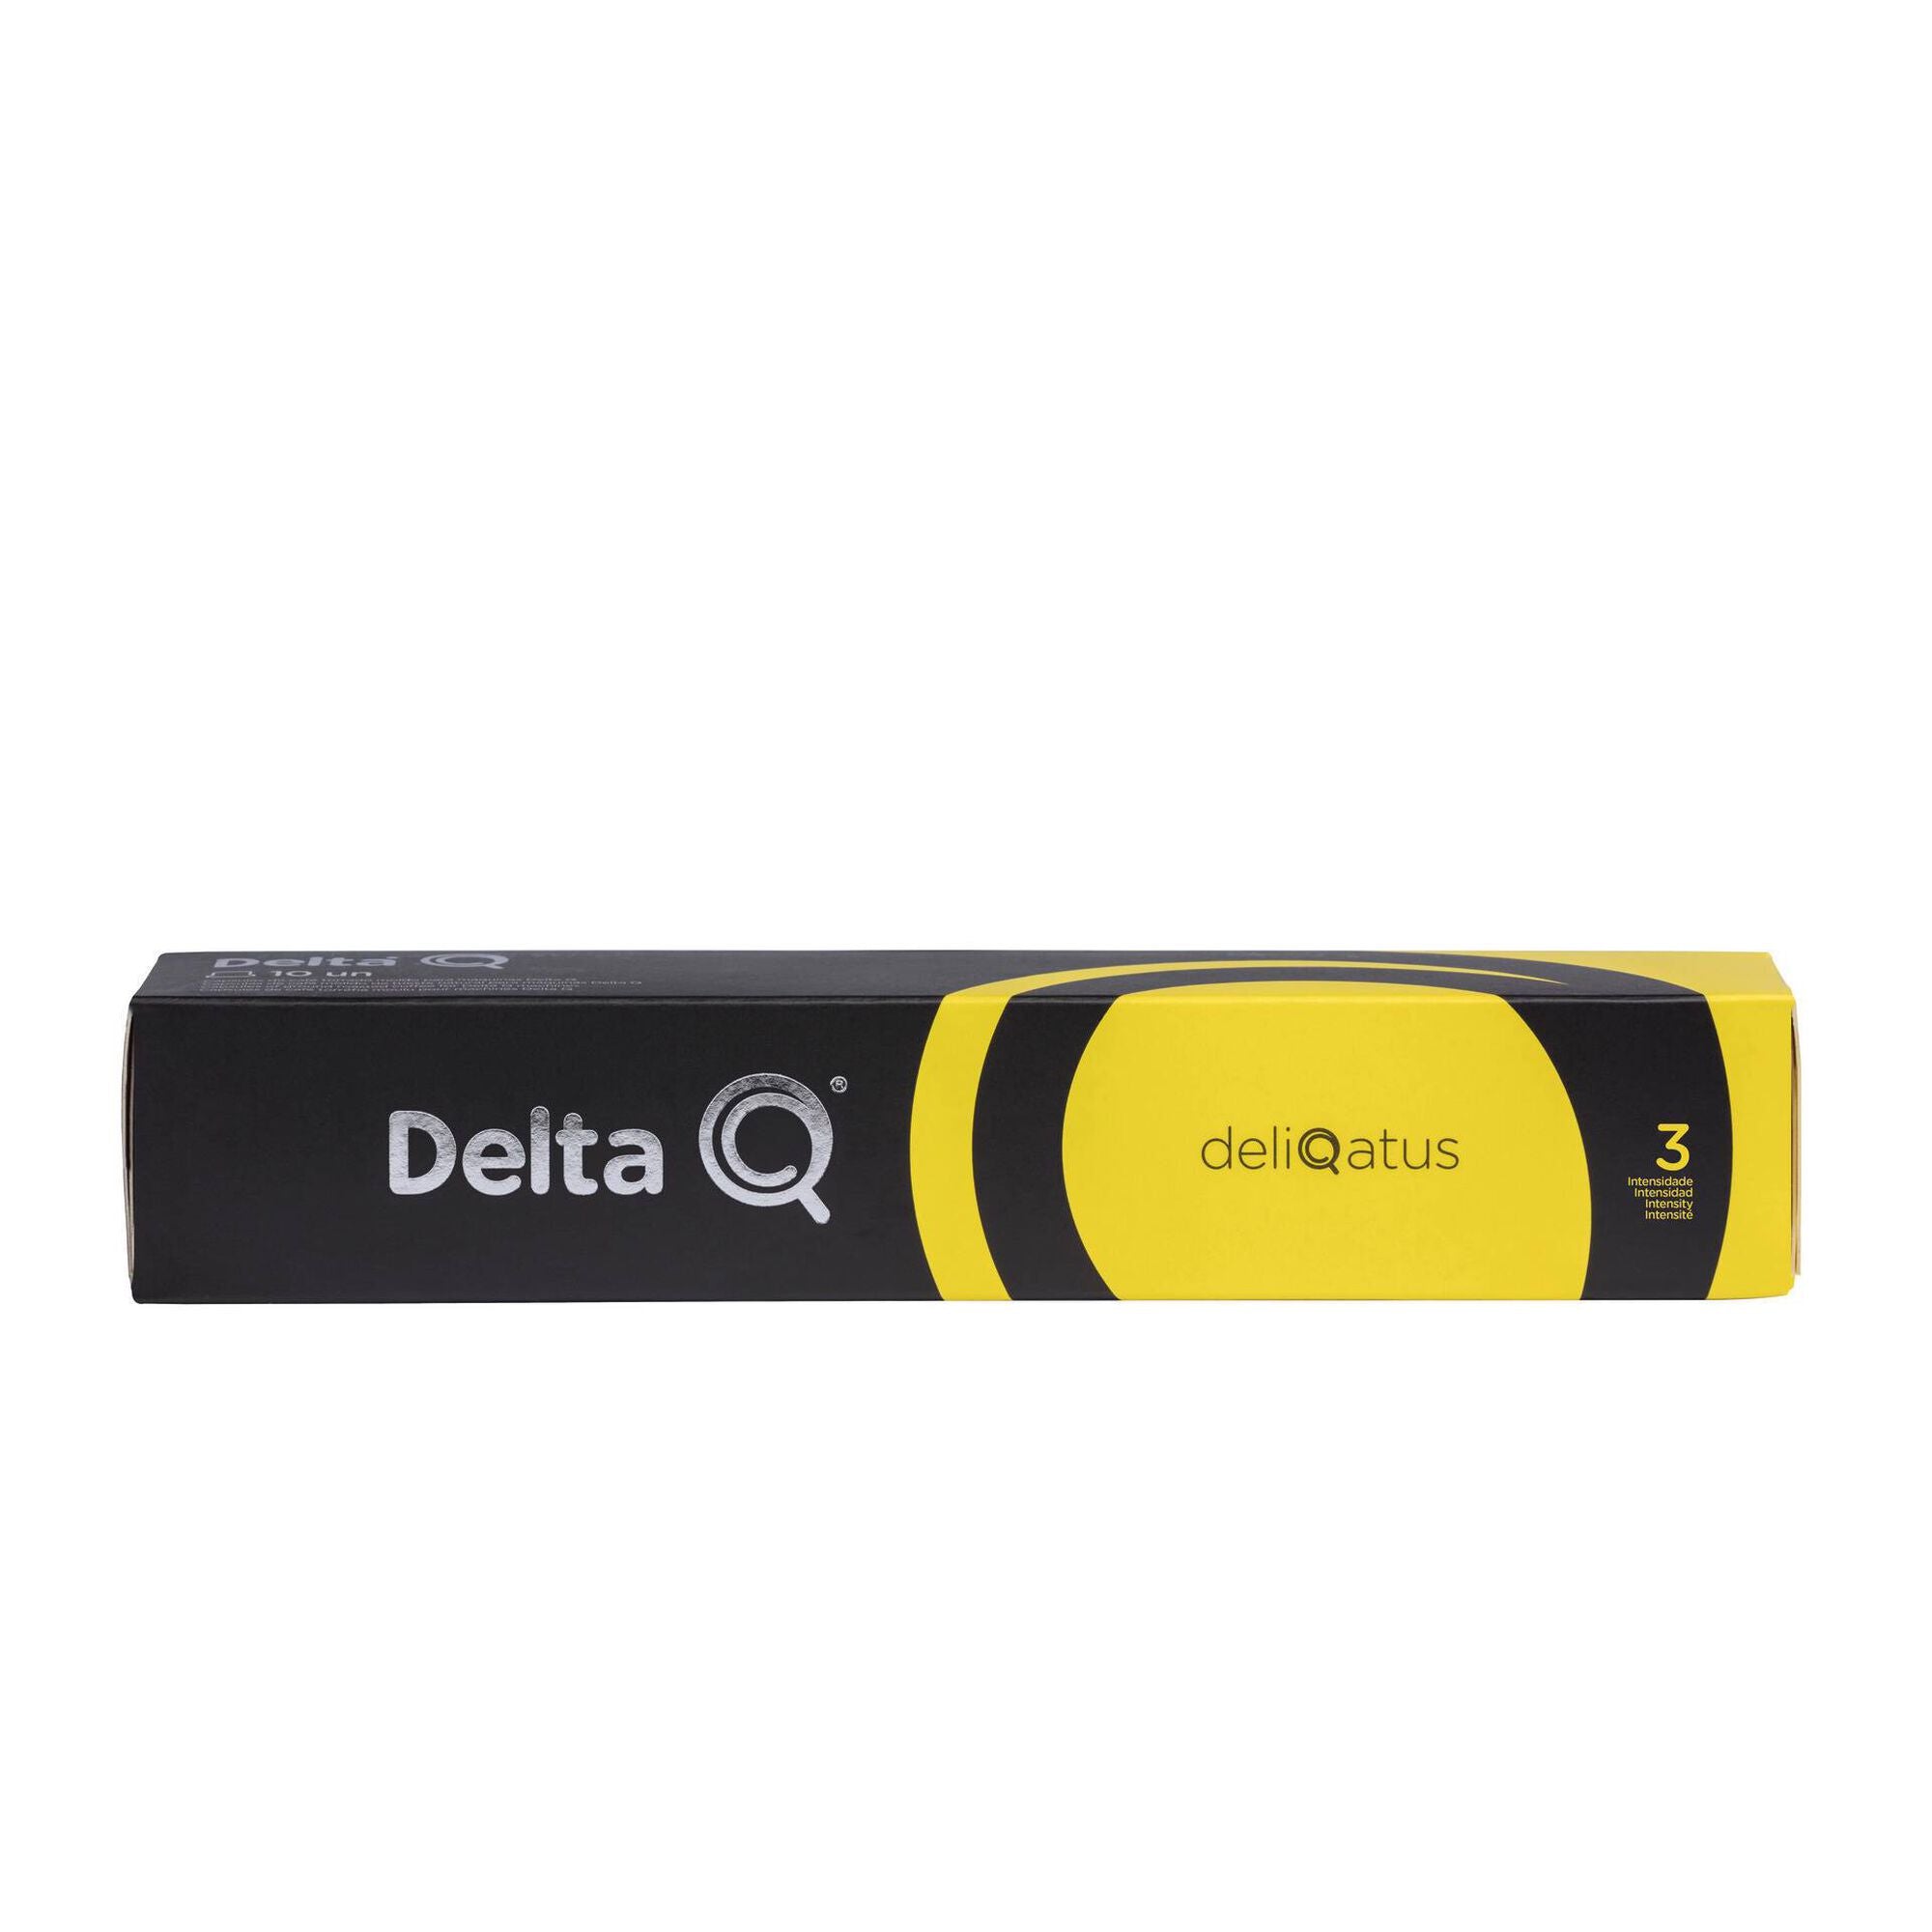 Delta Q - deliqatus